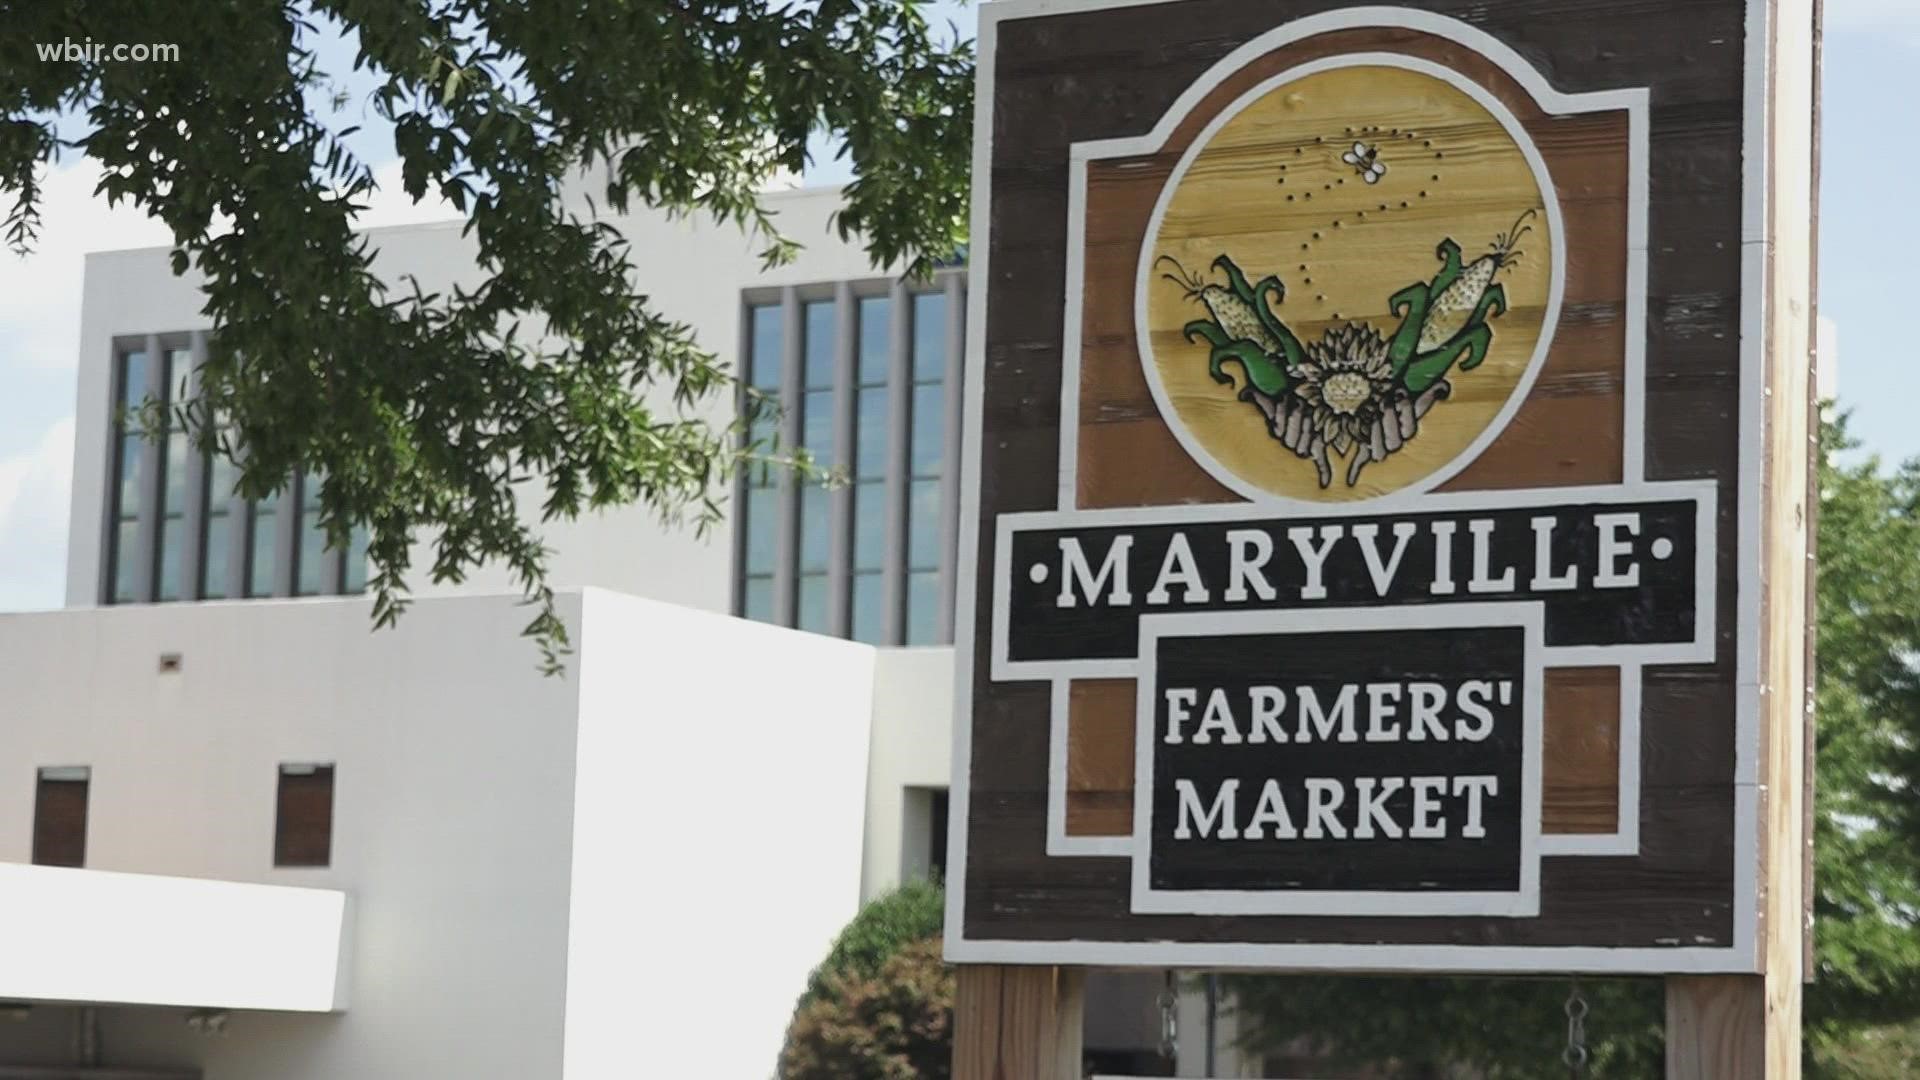 Maryville farmers market sign